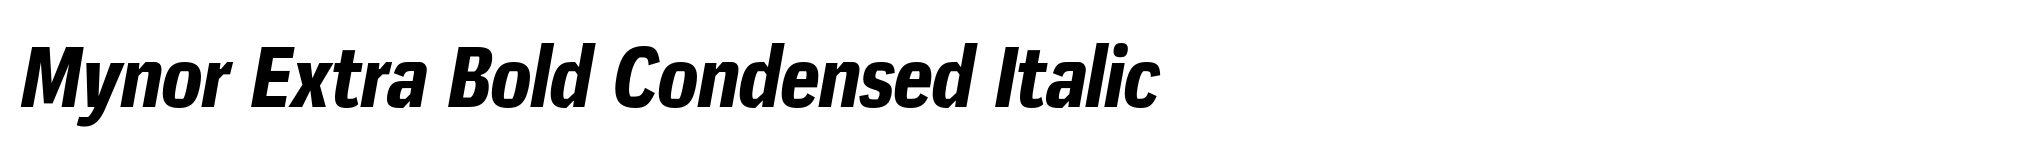 Mynor Extra Bold Condensed Italic image